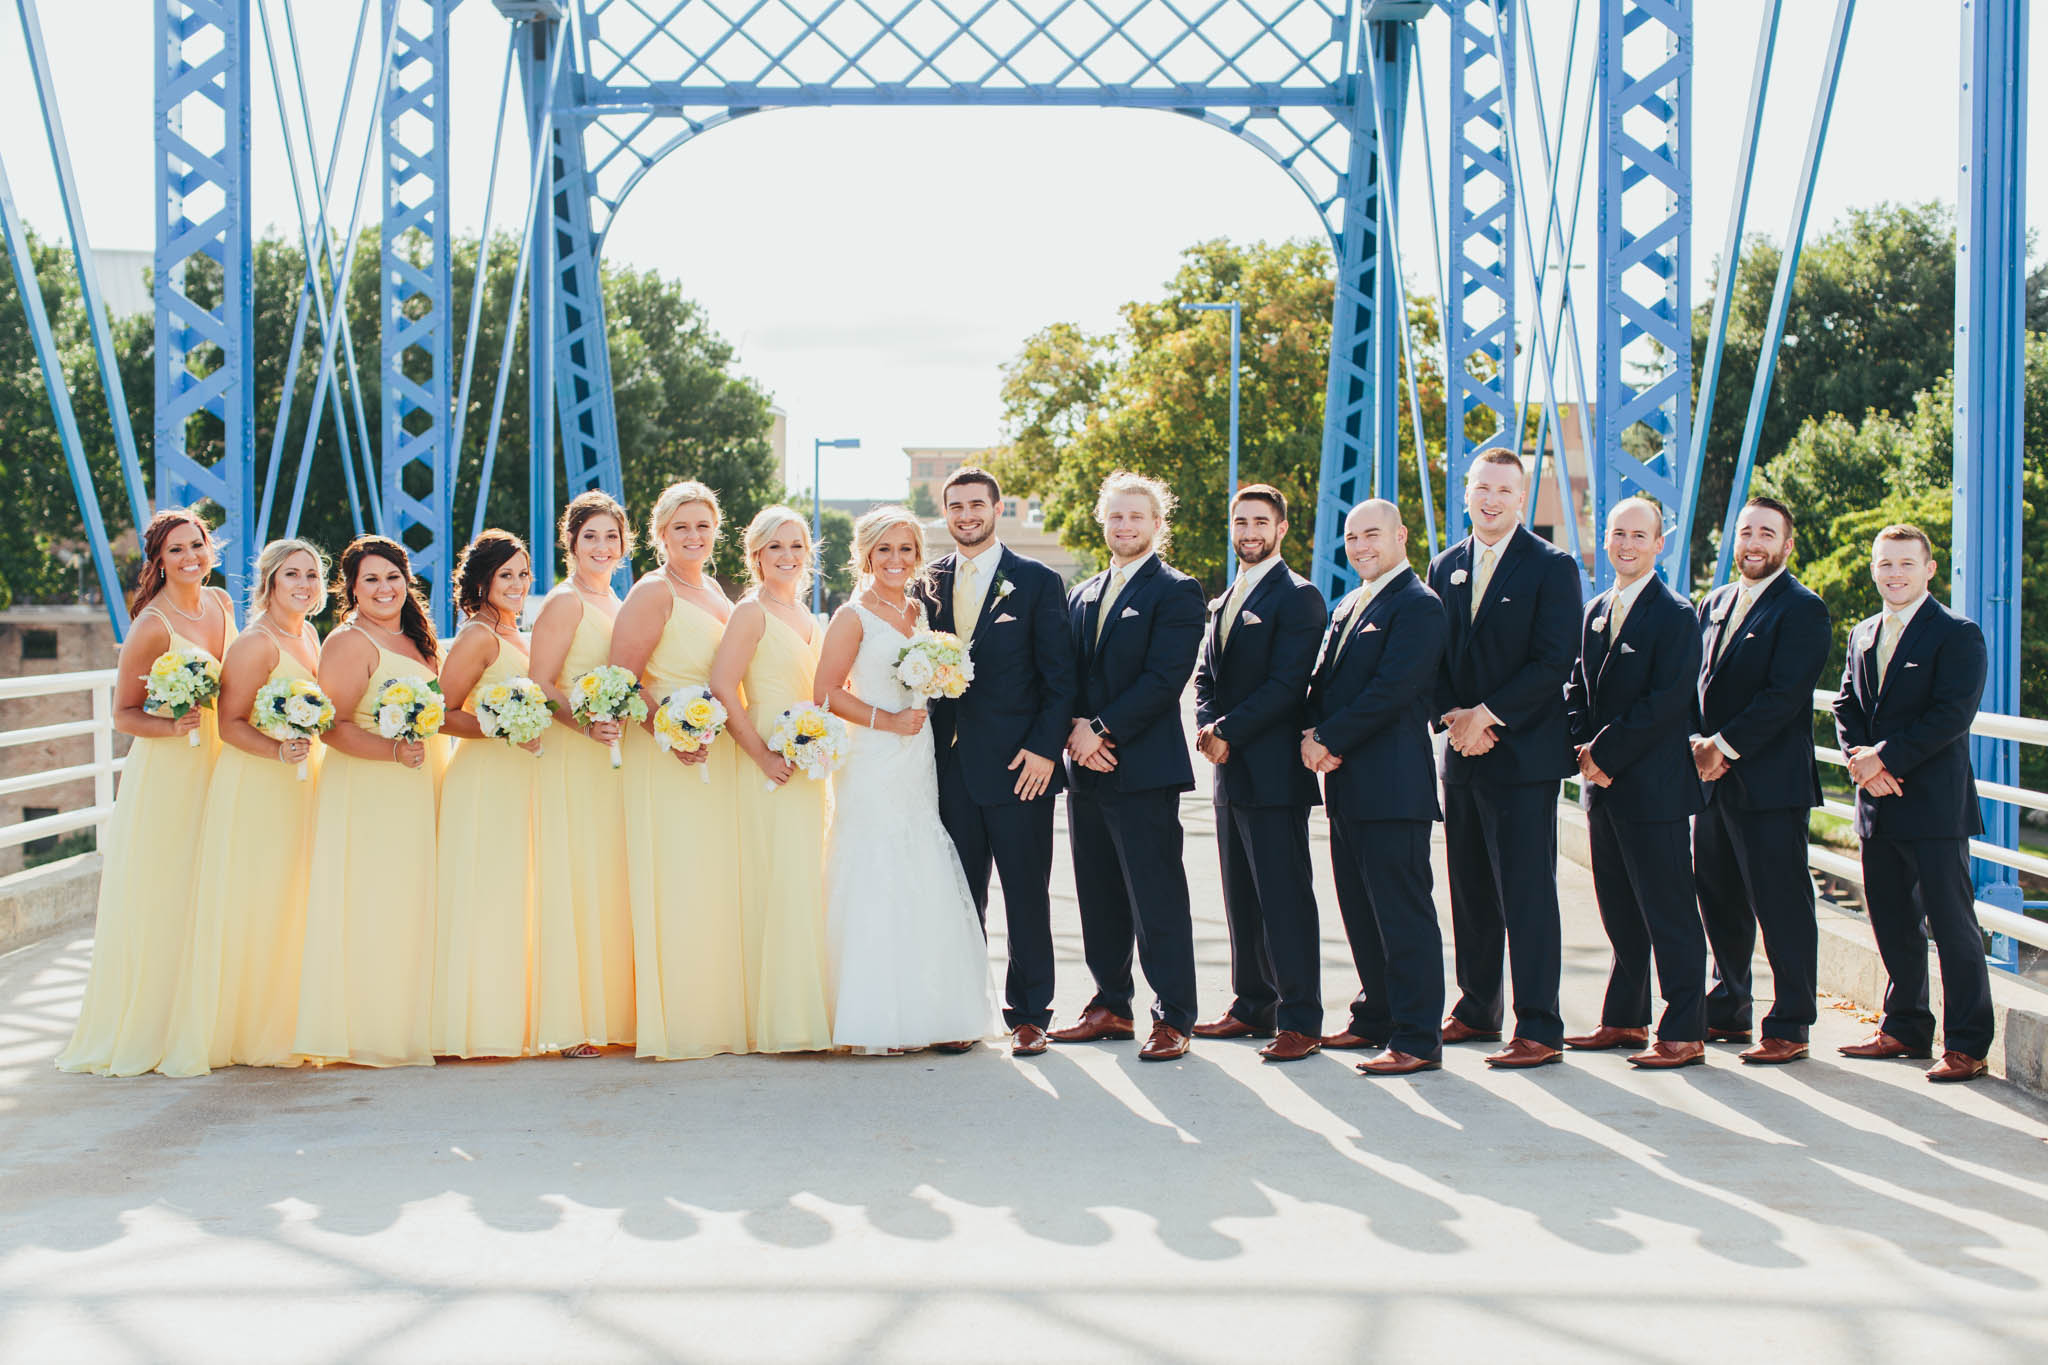 Jillian VanZytveld Photography - Grand Rapids Lifestyle Wedding Photography - 107.jpg